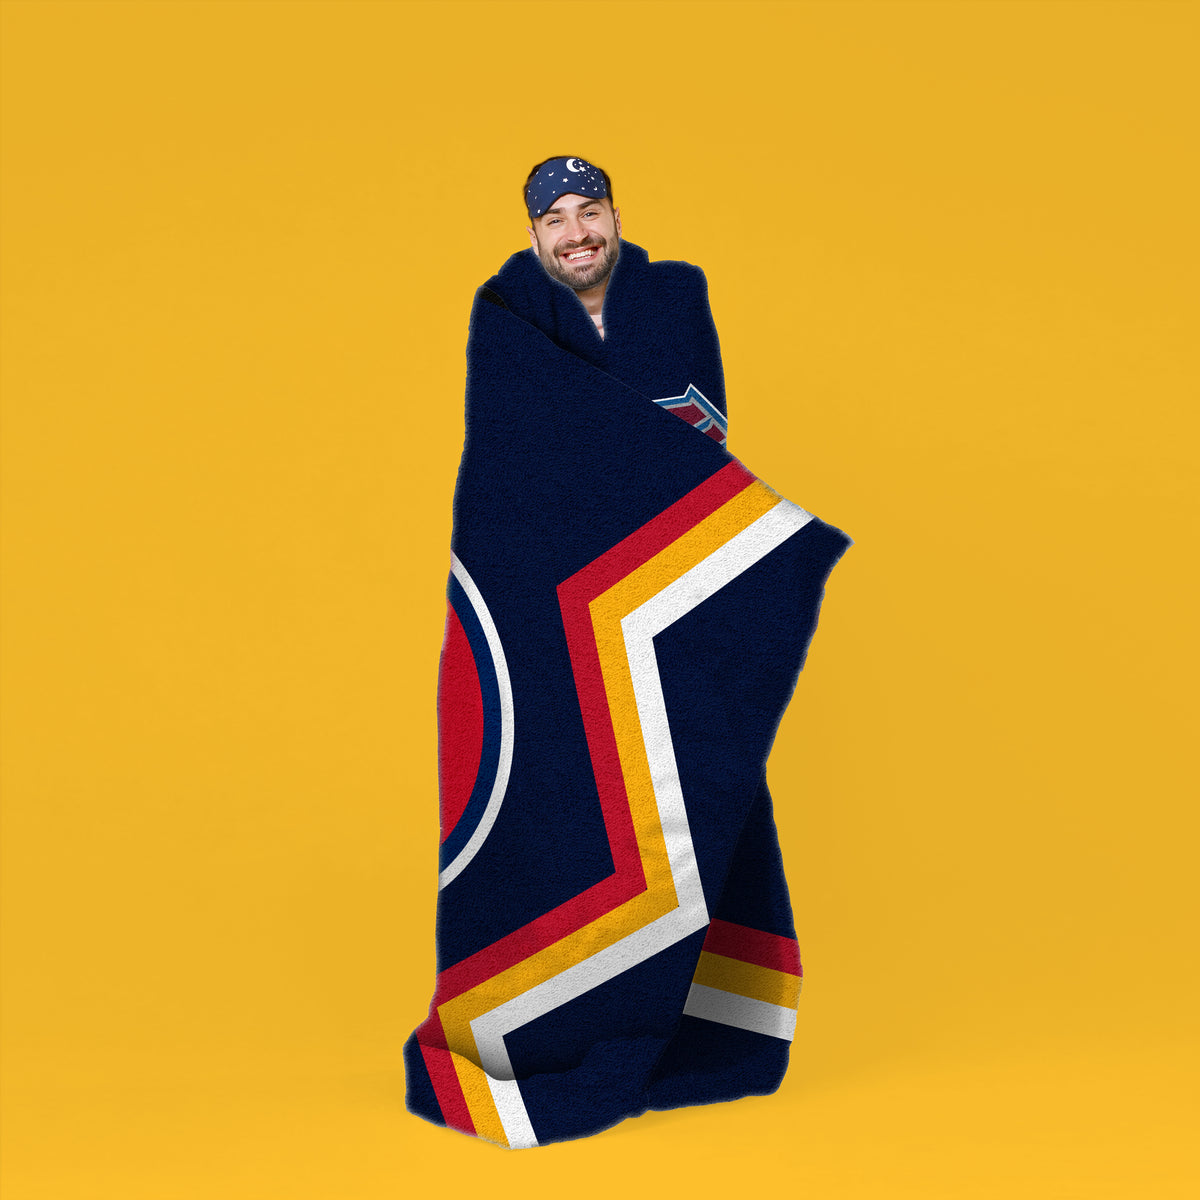 Colorado Avalanche Reverse Retro 60” x 80” Raschel Plush Blanket